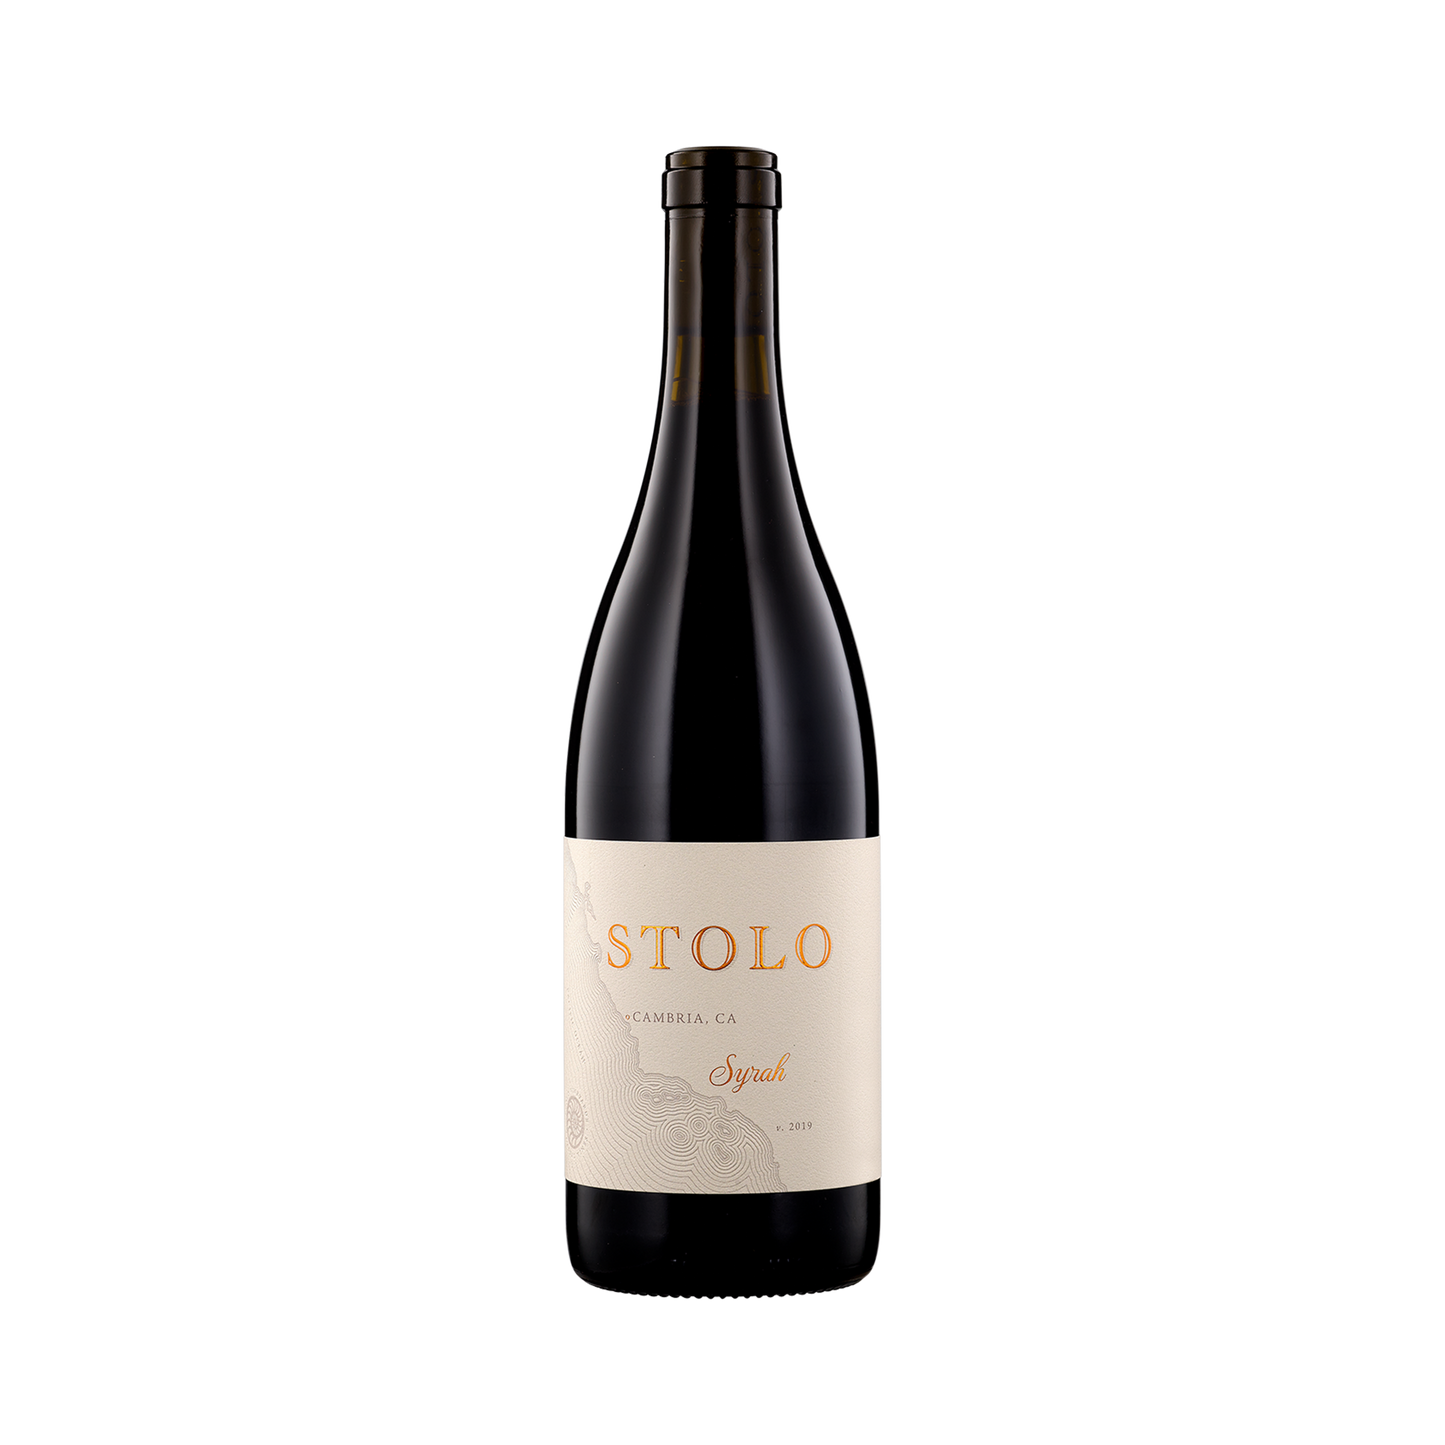 A bottle of Stolo Family Vineyards & Winery 2019 Syrah.